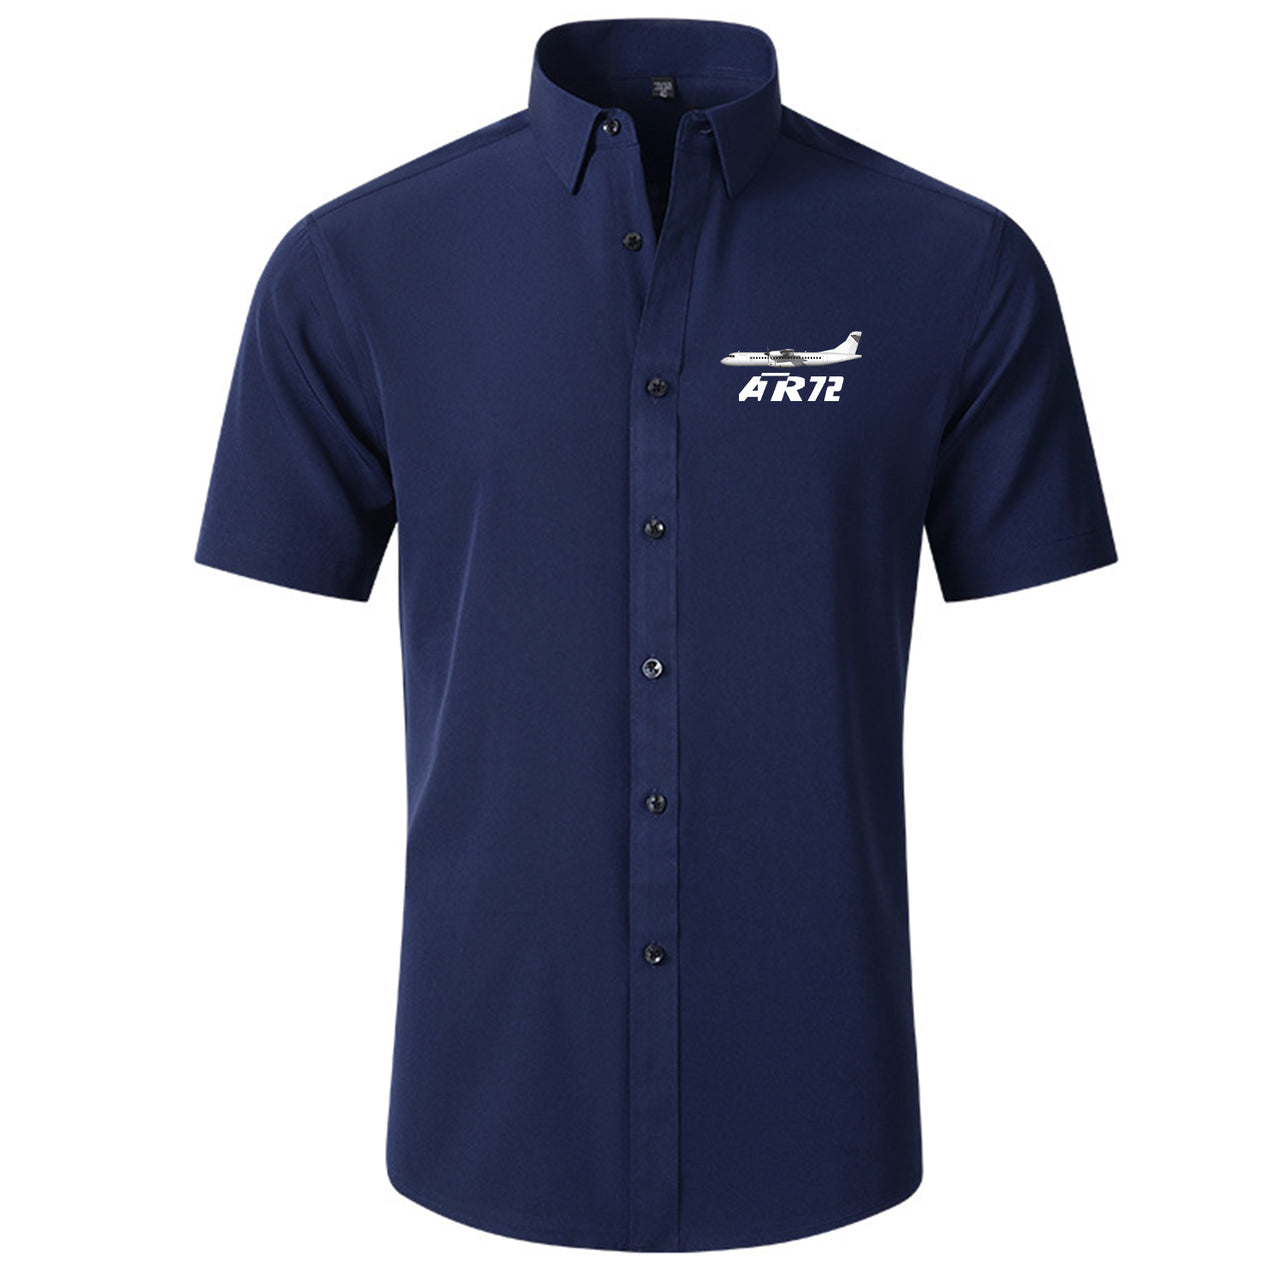 The ATR72 Designed Short Sleeve Shirts